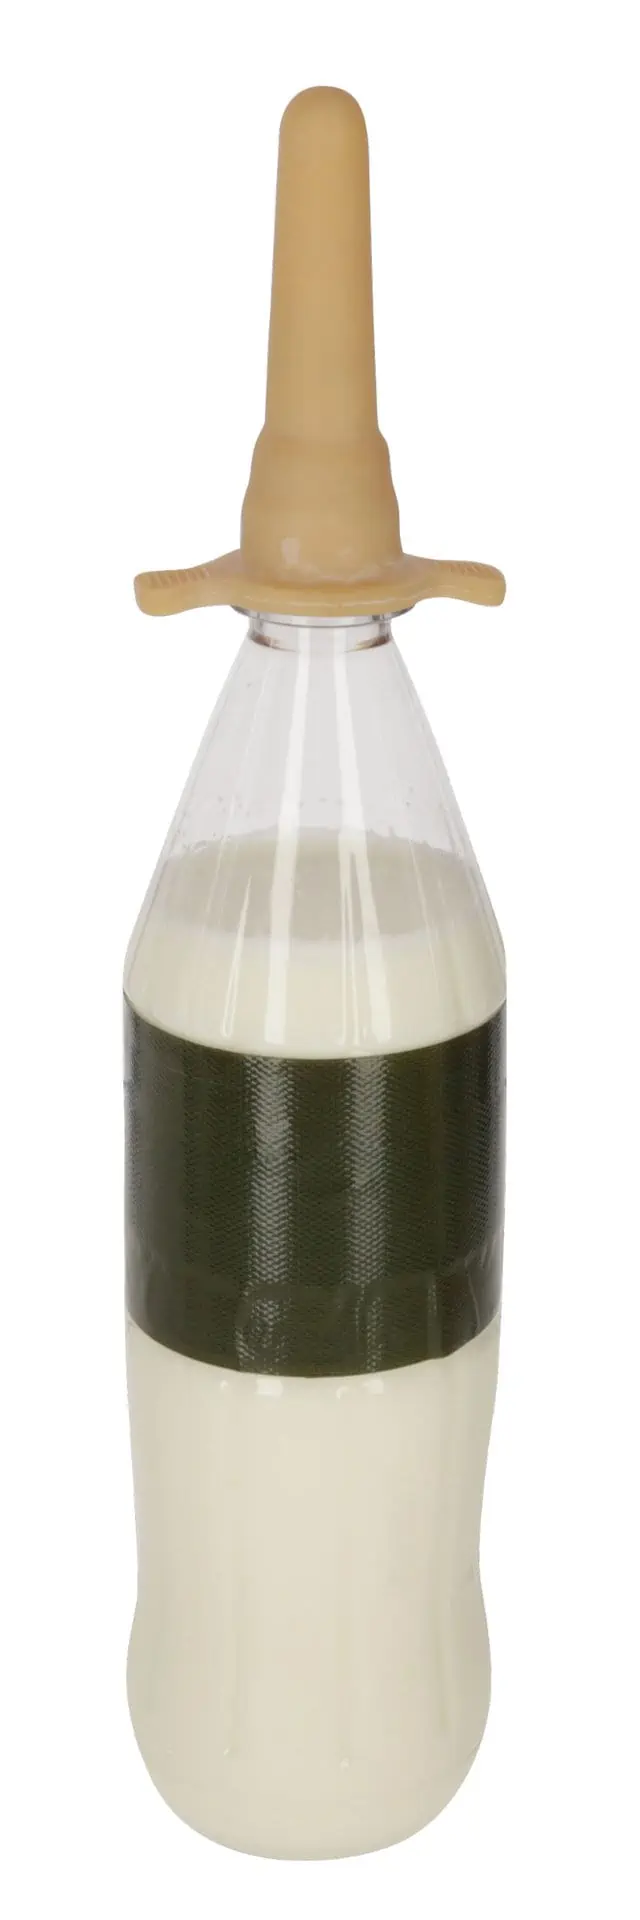 Bottle Teat for Calves 10 pcs per bag